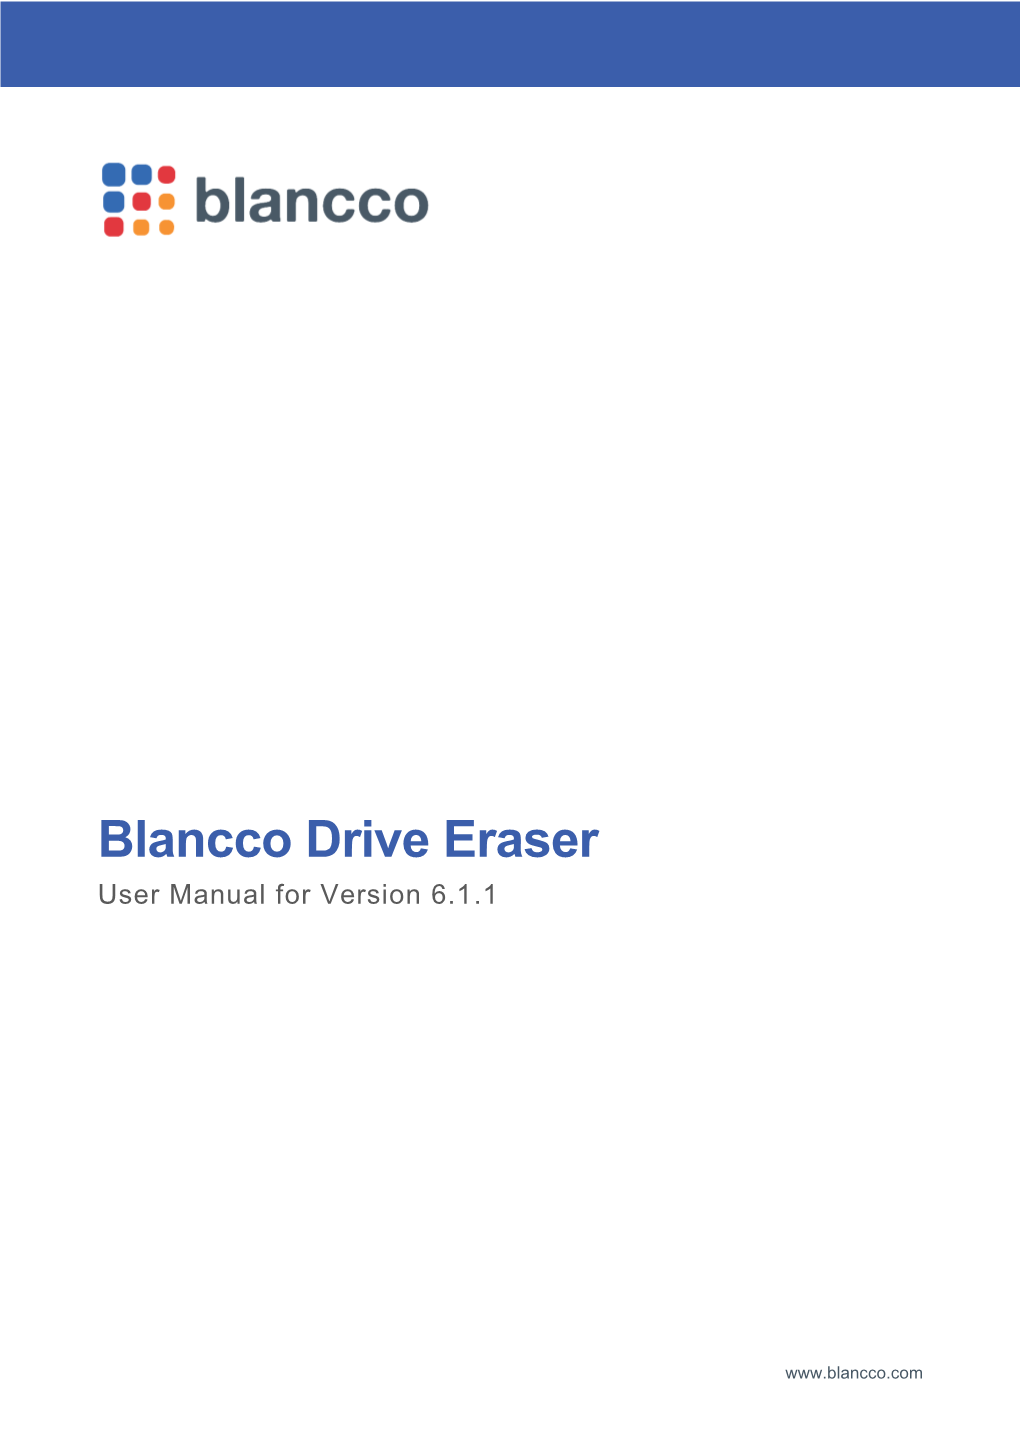 Blancco Drive Eraser User Manual for Version 6.1.1